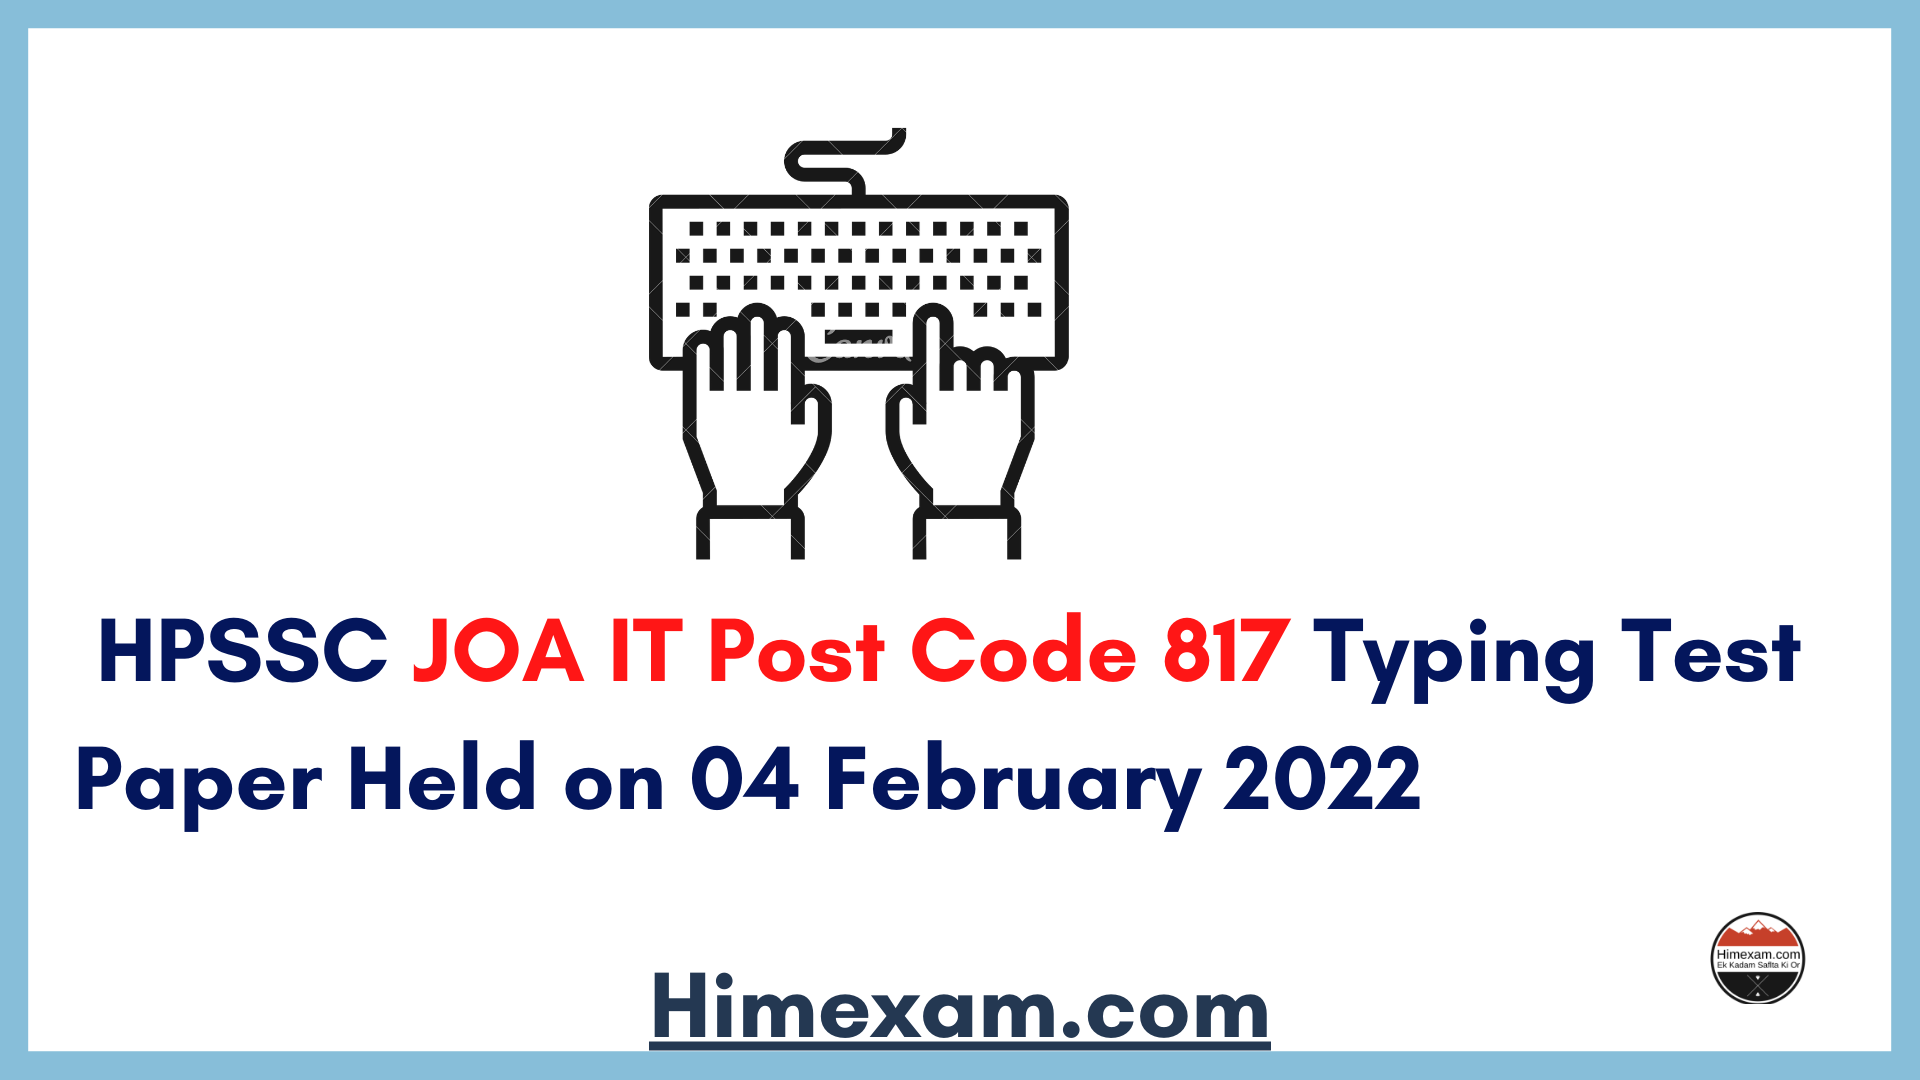 HPSSC JOA IT Post Code 817 Typing Test Paper Held on 04 February 2022